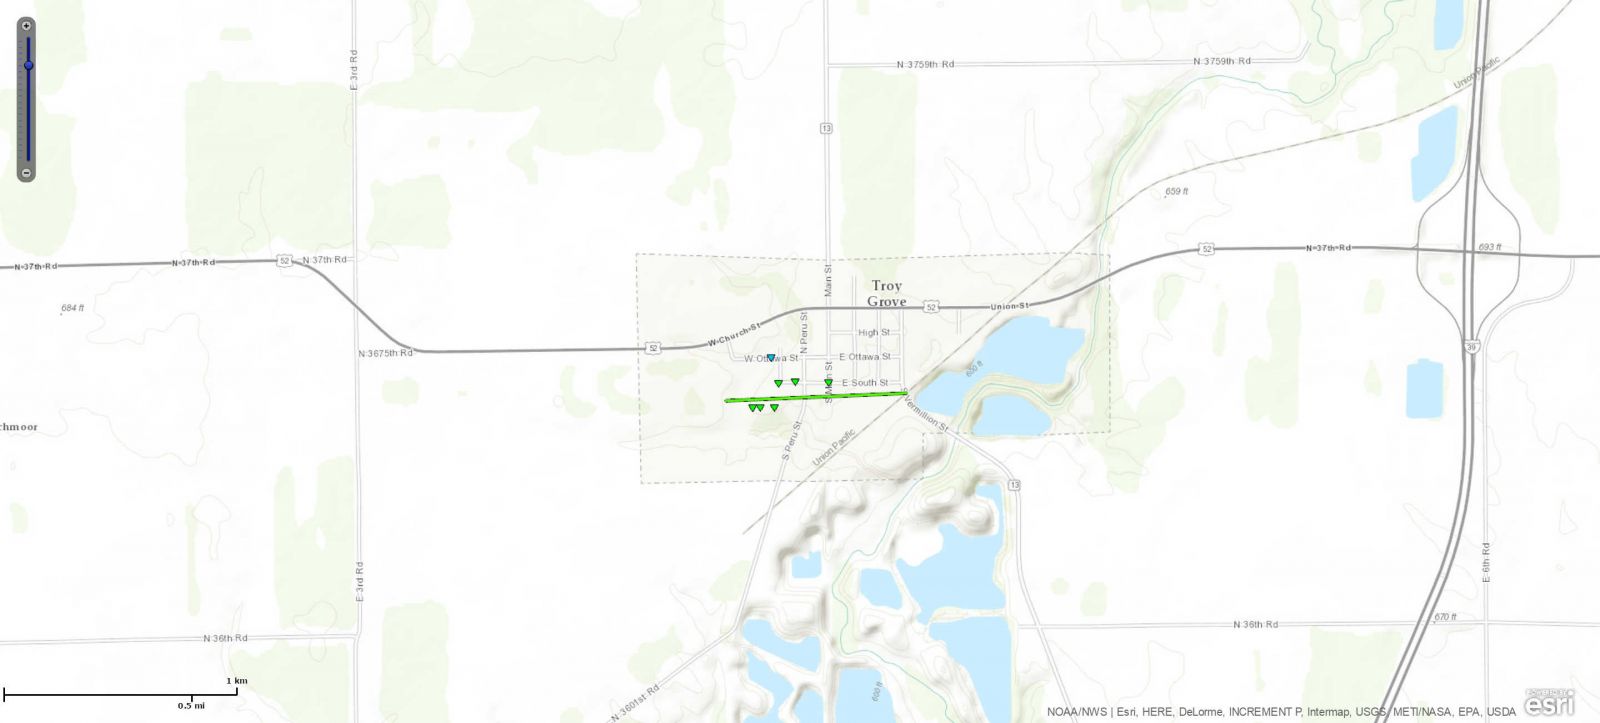 Track Map of Troy Grove, IL tornado